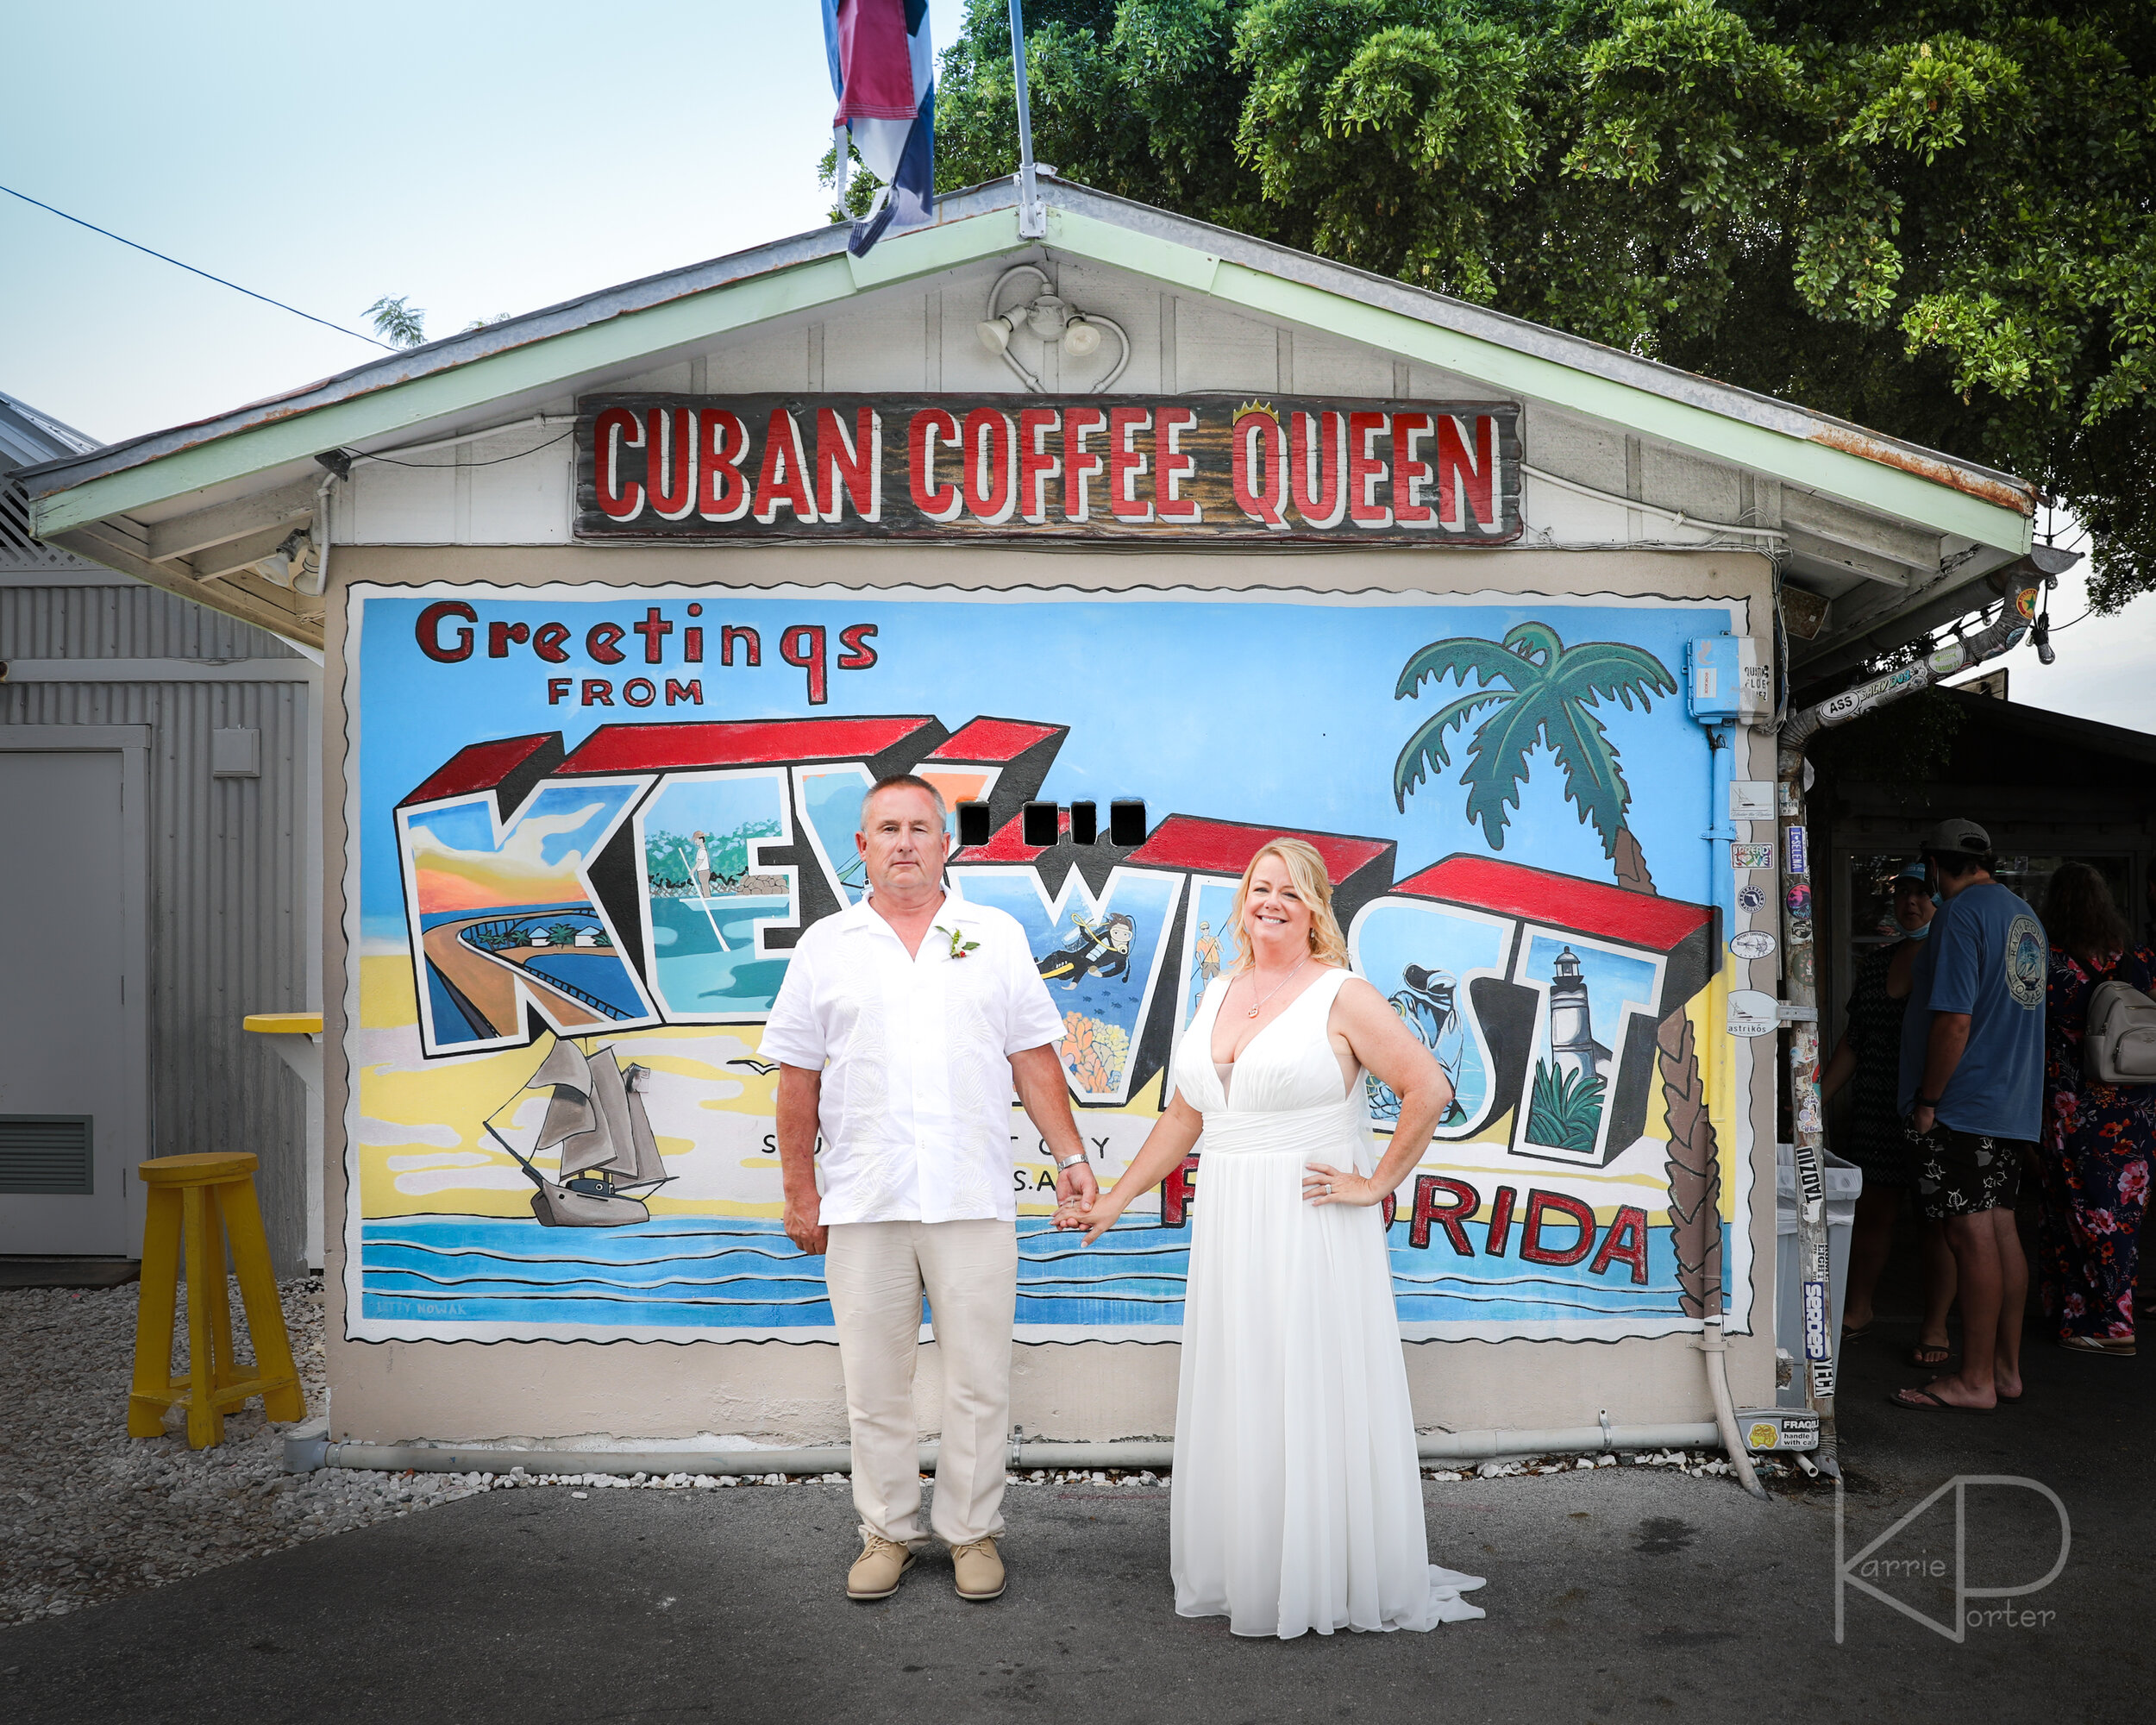 Regan and David Key West Wedding